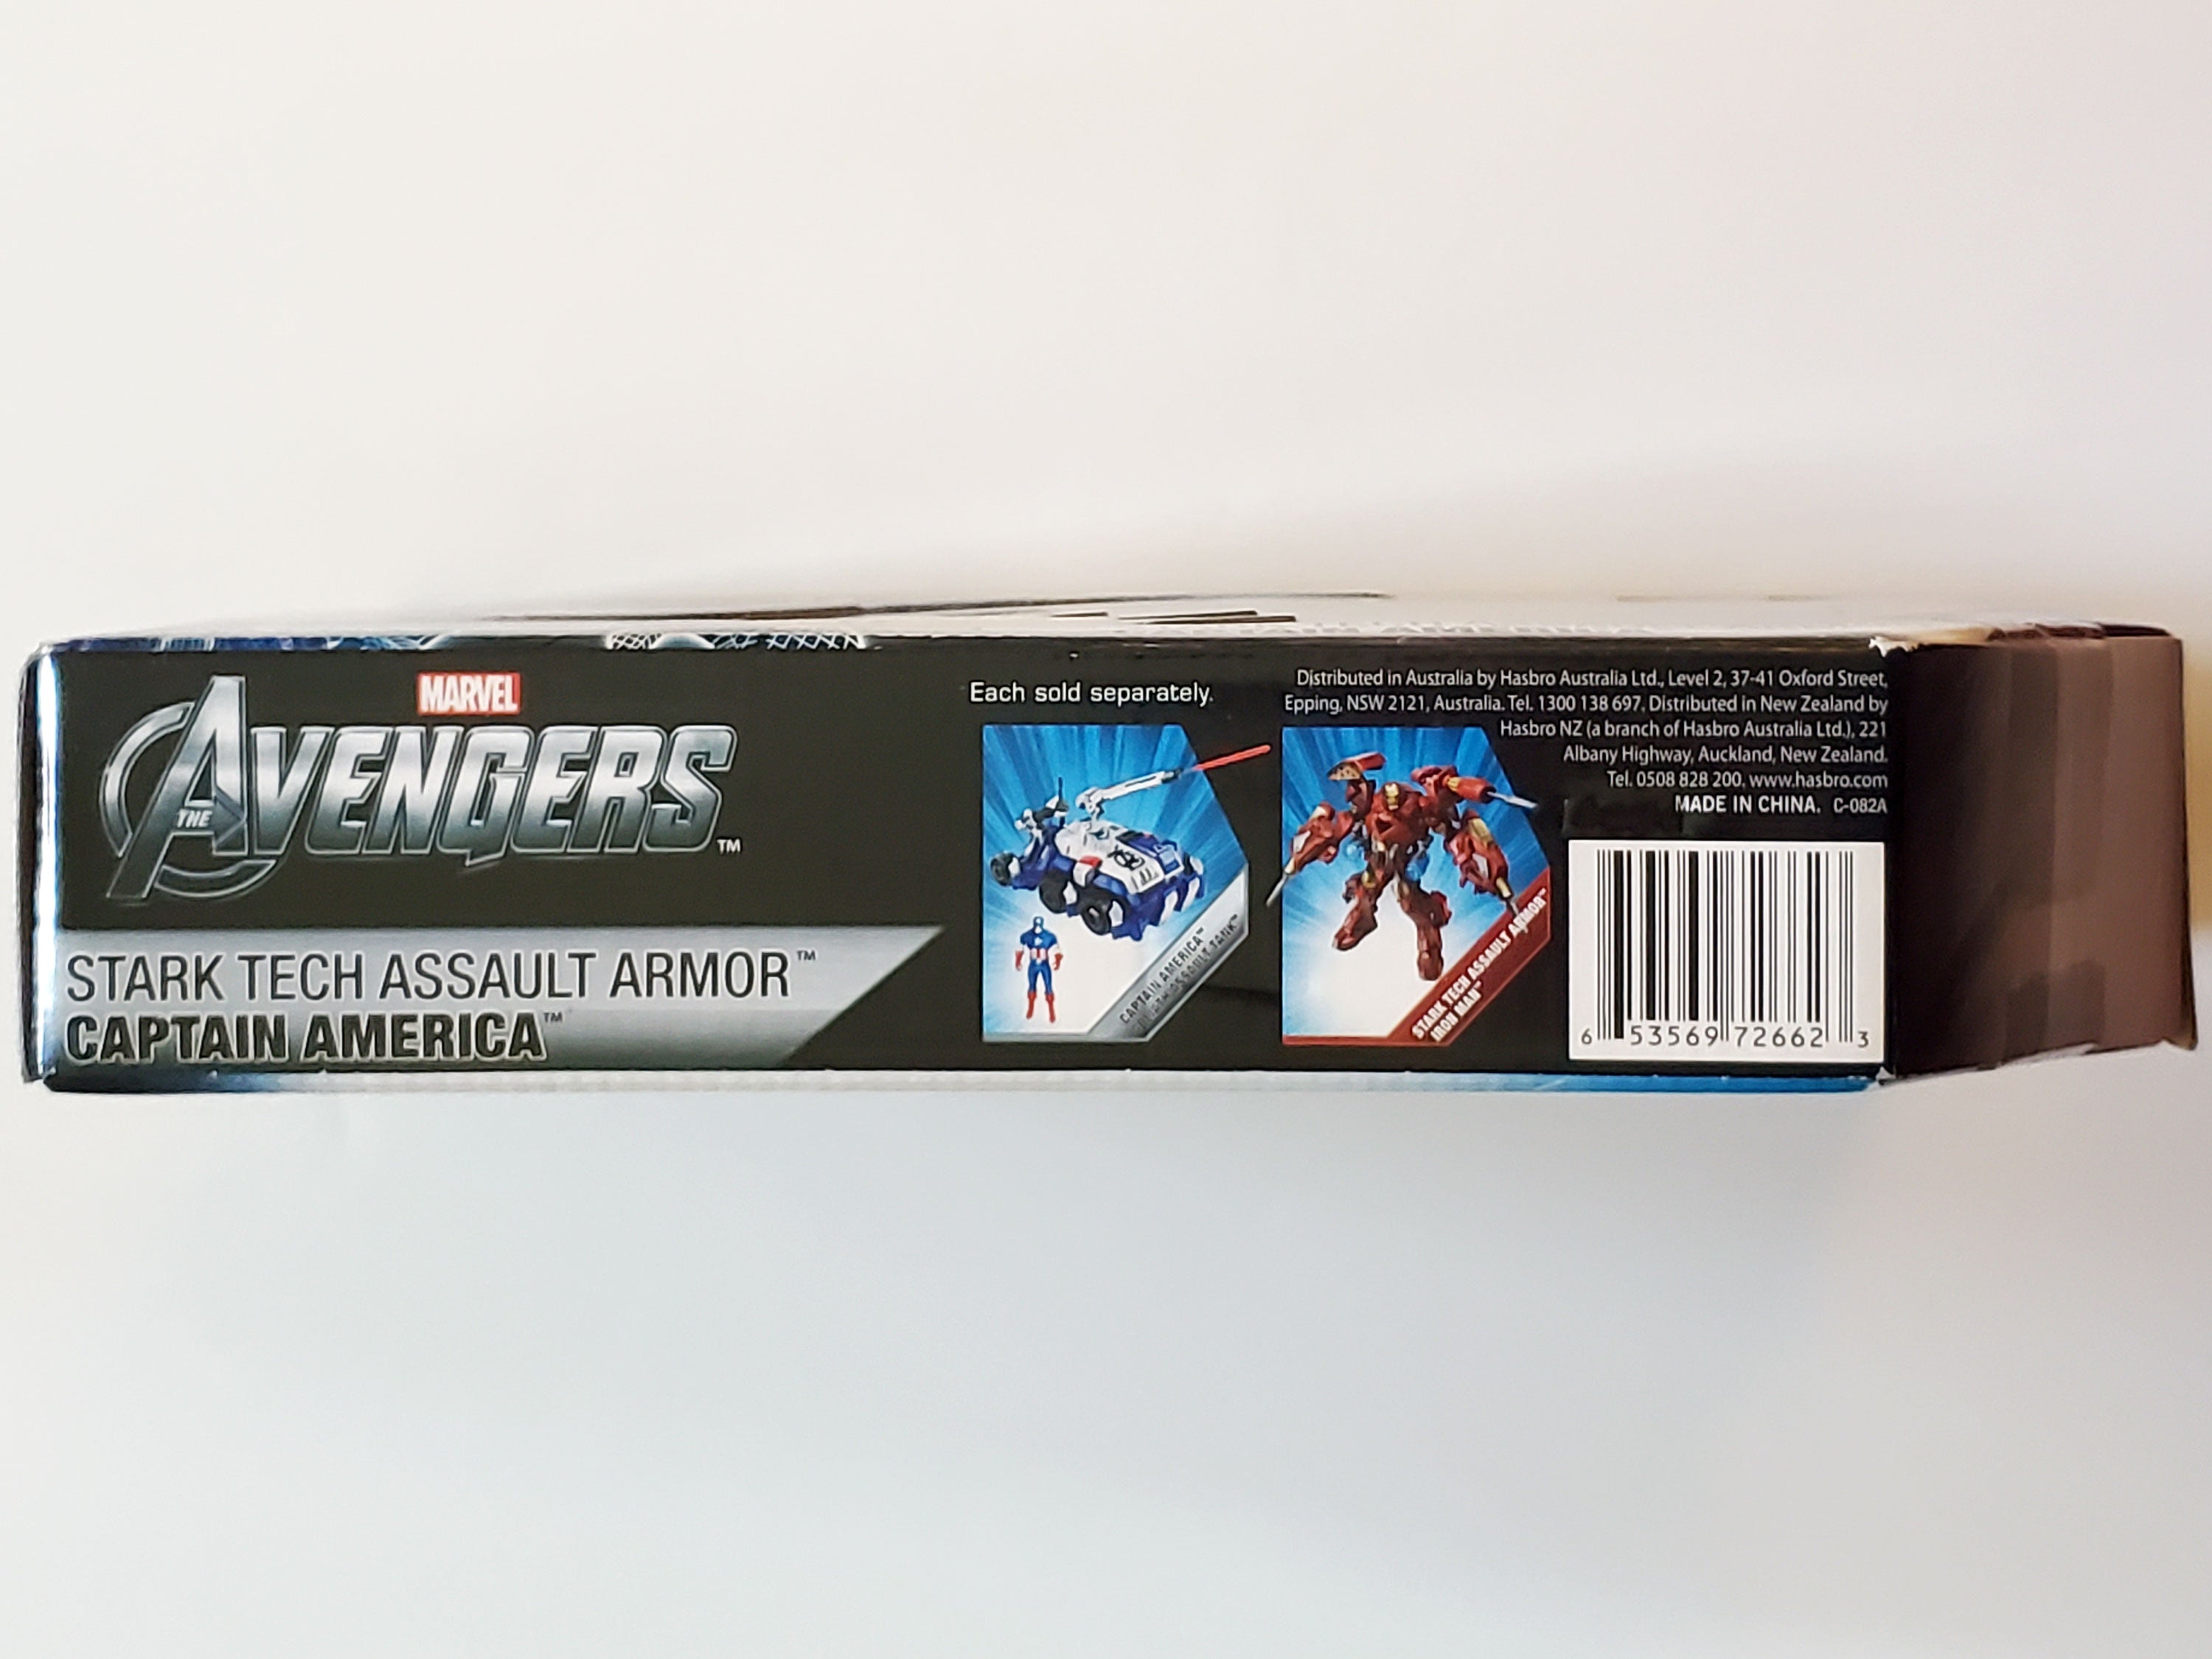 The Avengers Stark Tech Assault Armor with Captain America